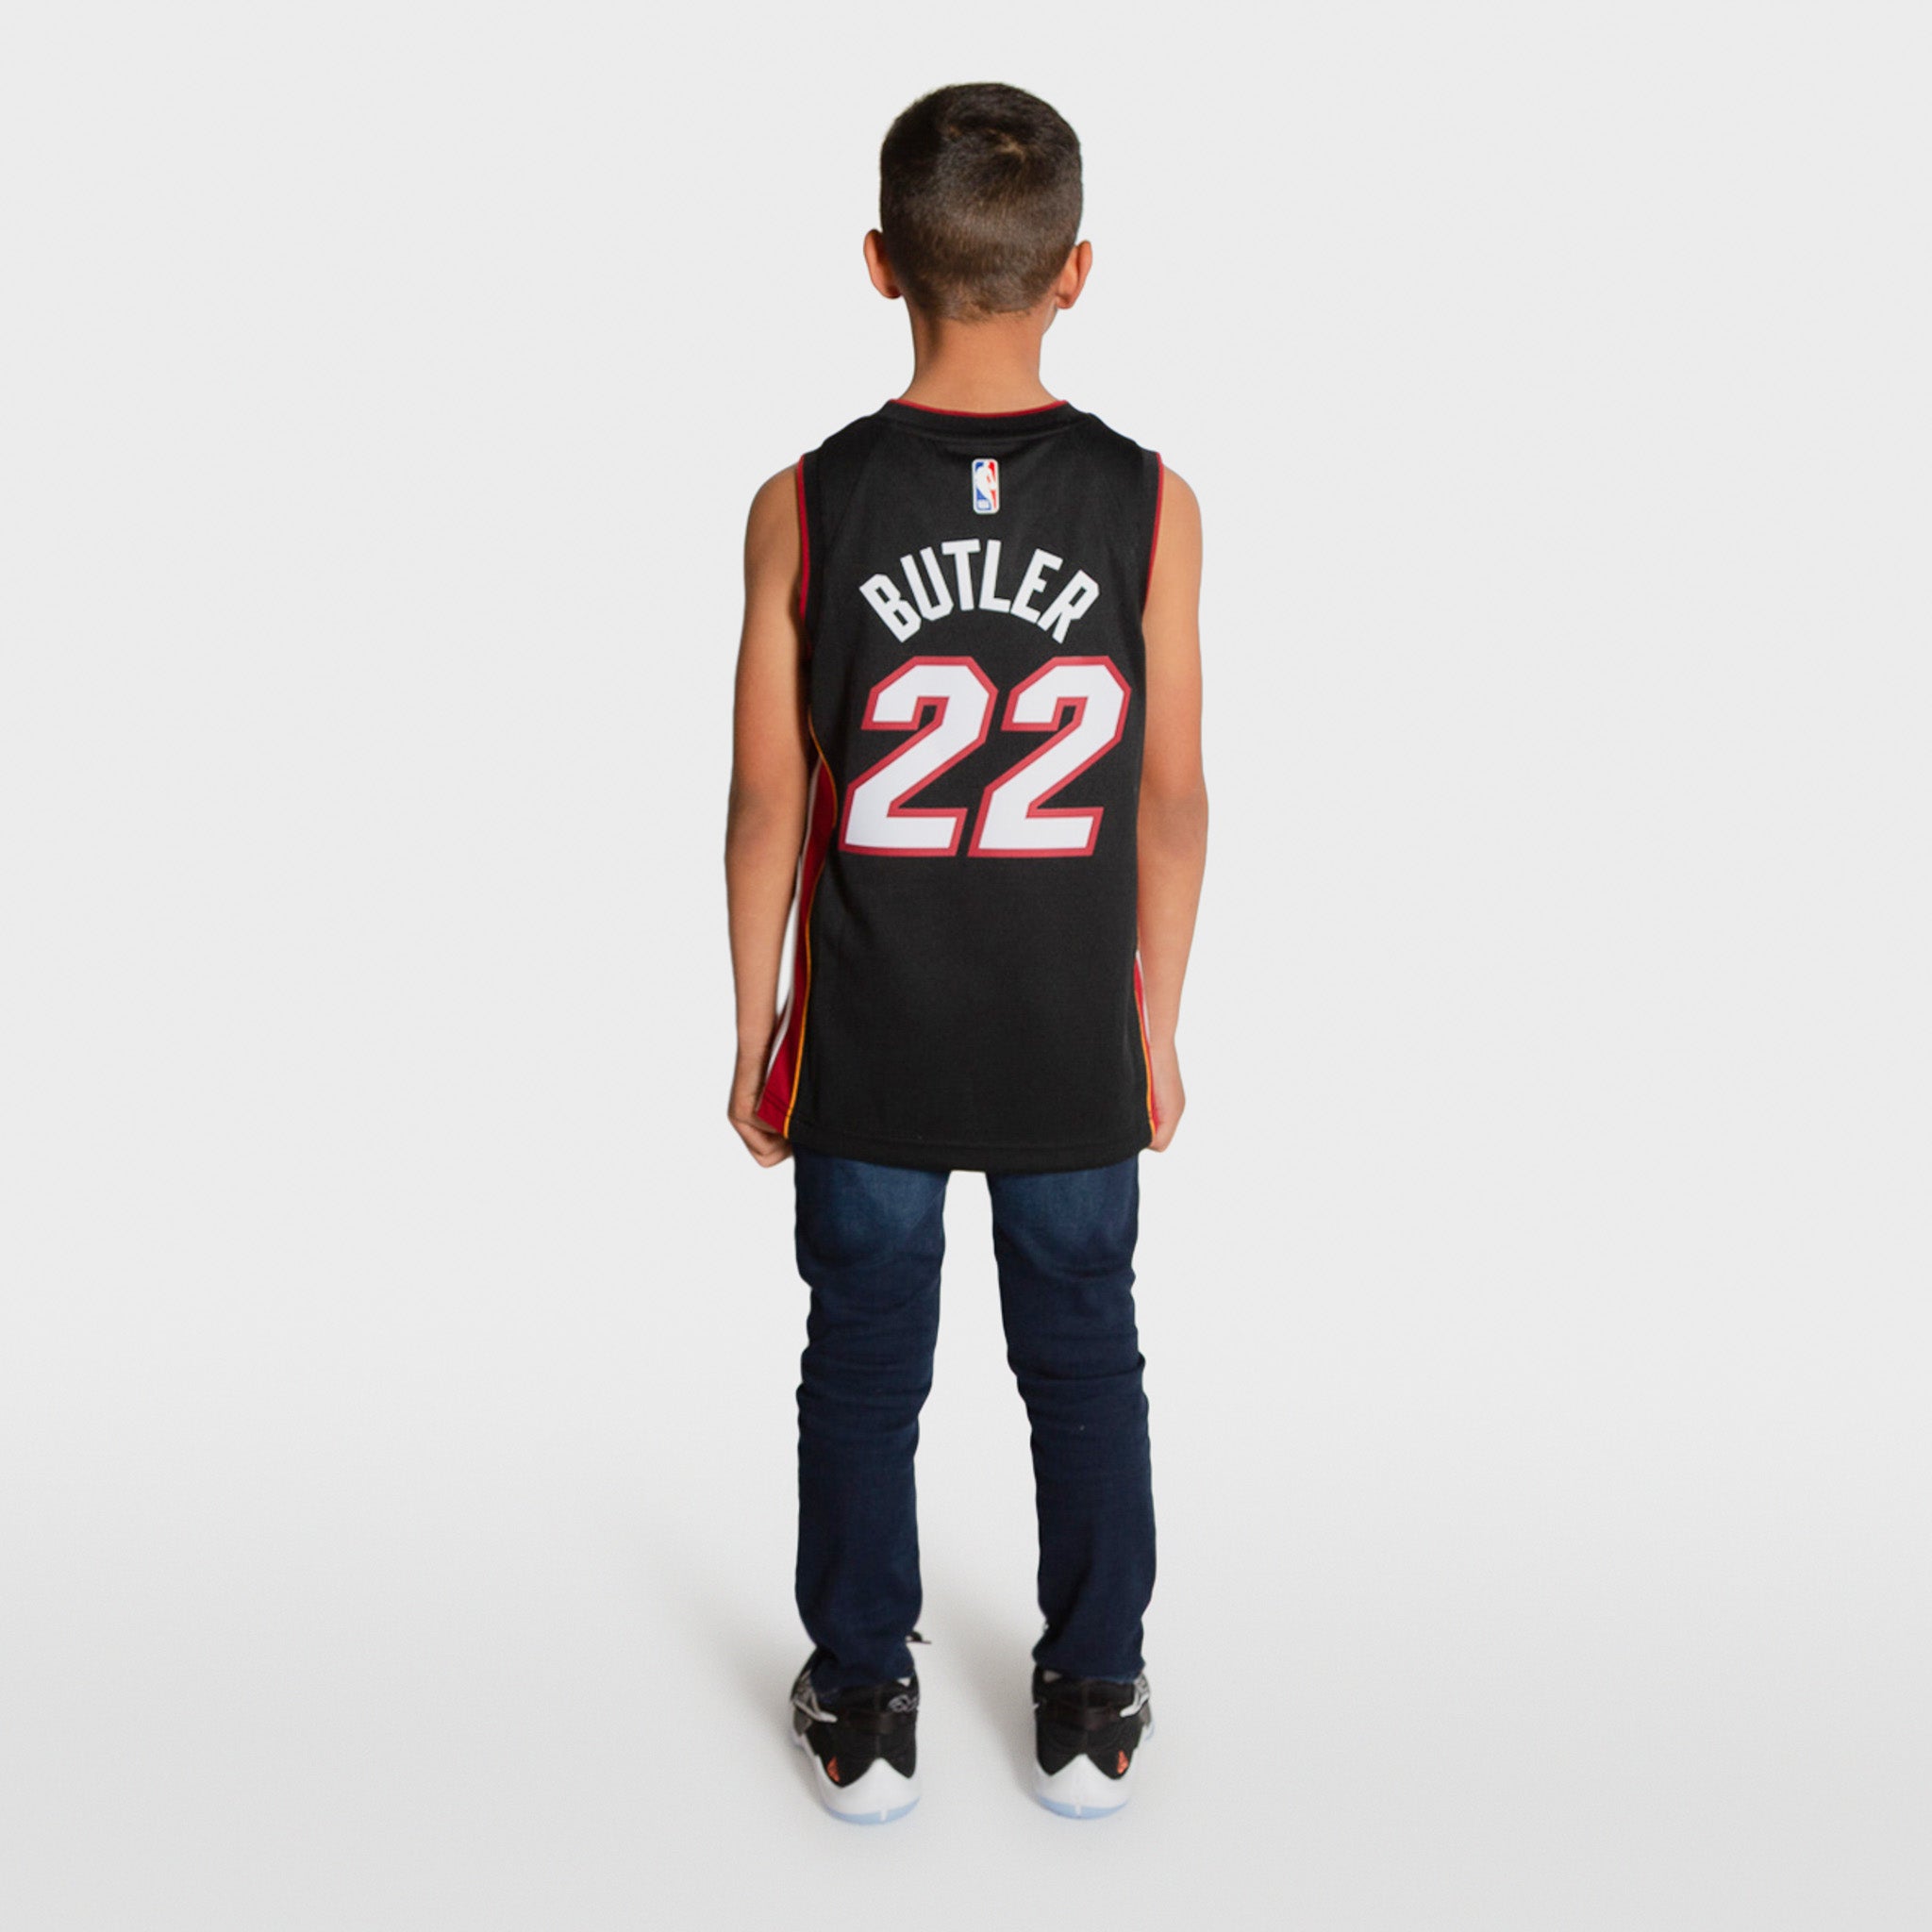 Nike City Edition Jersey Kids Miami Heat Jimmy Butler 'Pink/Blue' –  Bouncewear